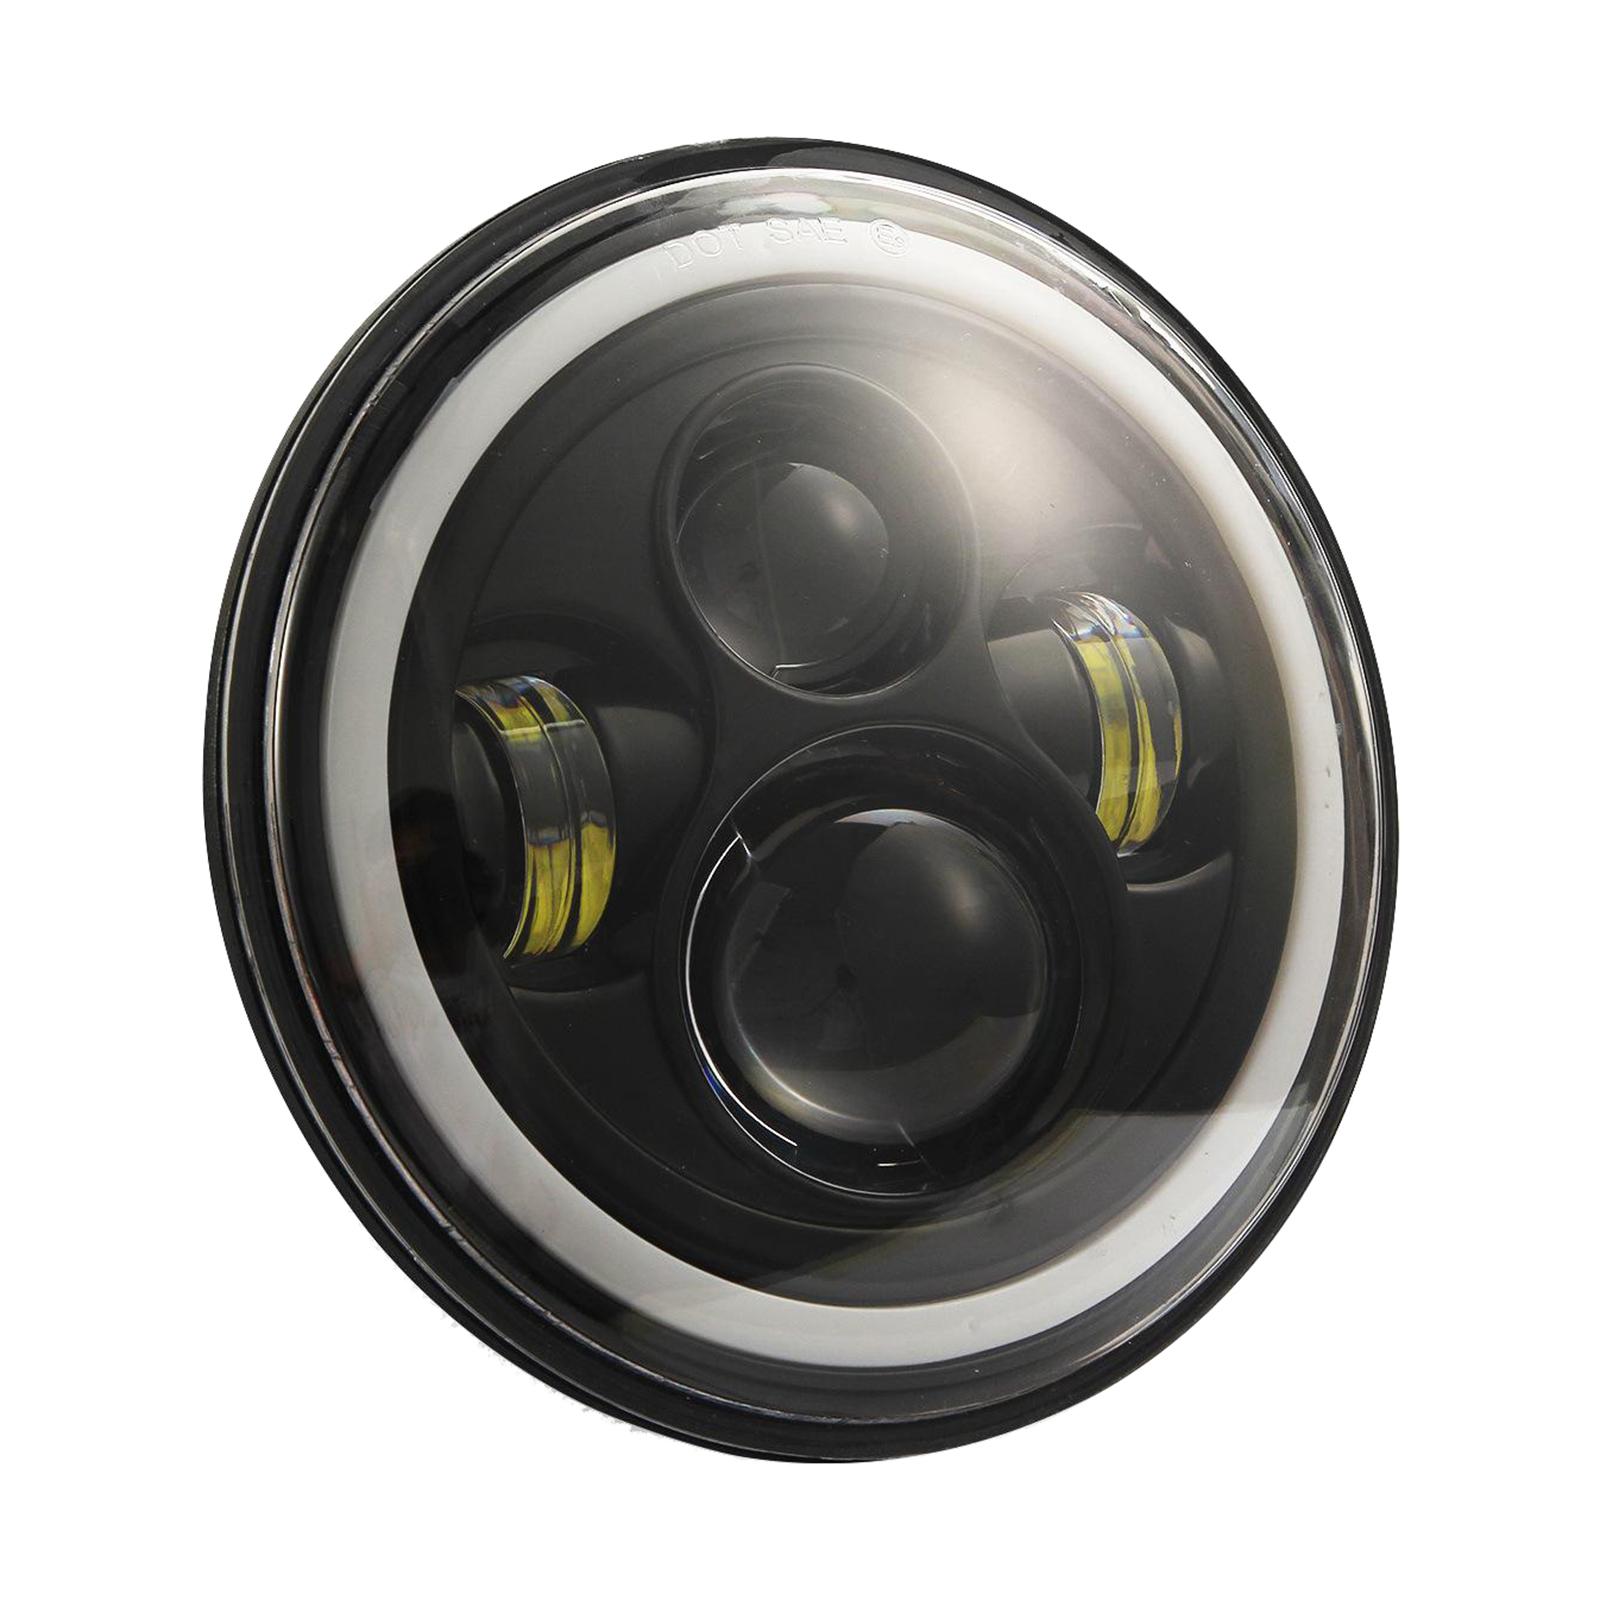 7" Round LED Headlights 200W Halo Headlight Angel Eye Ring High Low Beam for Jeep Wrangler Unlimited JK 4 Door CJ 5 8 7